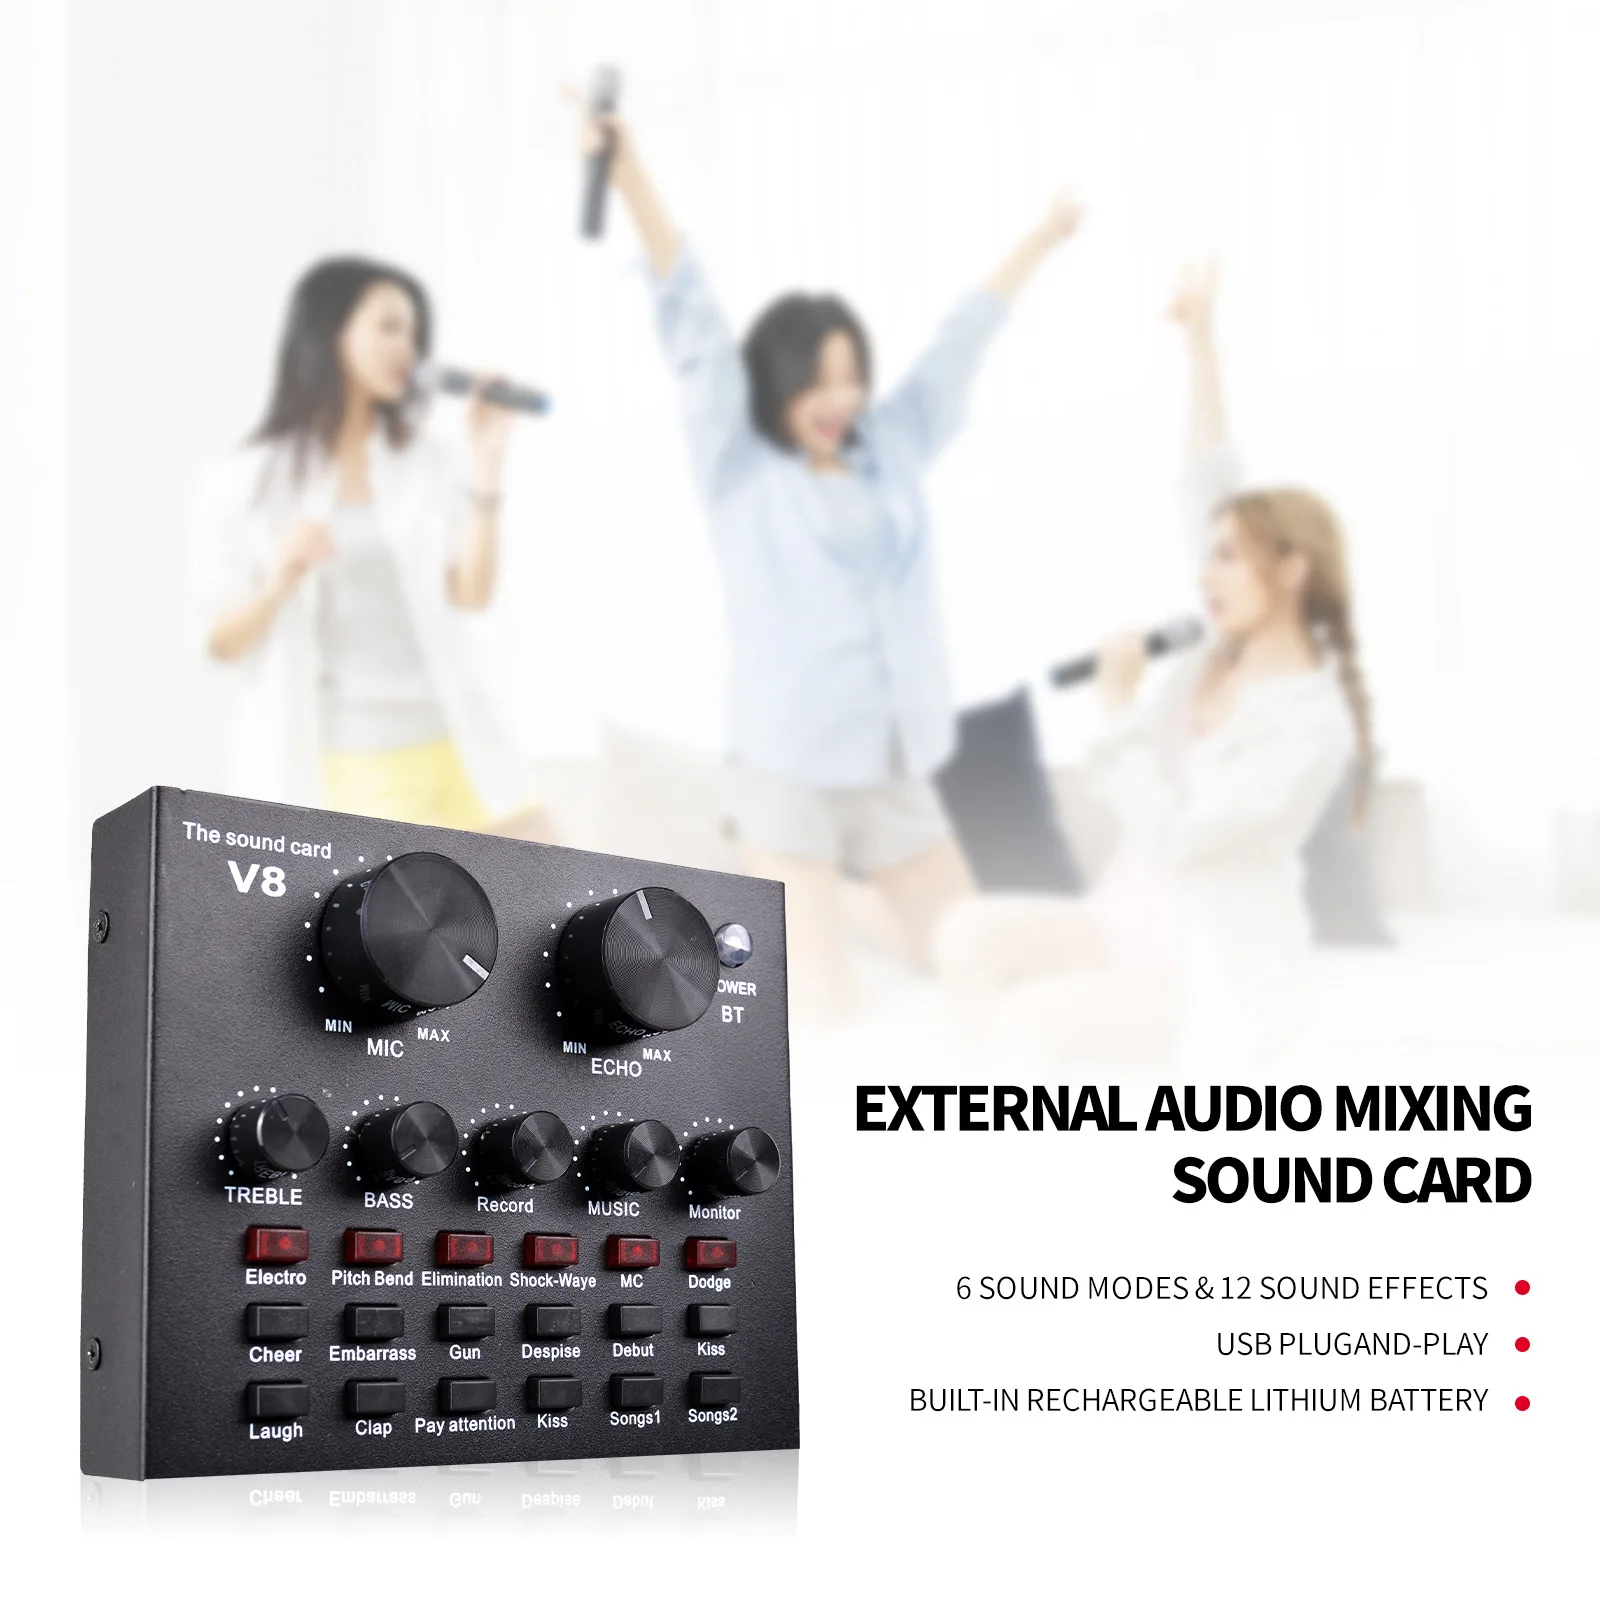 studio microphone BM 800 Professional Audio V8 Sound Card Set BM800 Mic Studio Condenser Microphone for Karaoke Podcast Recording Live Streaming usb microphone